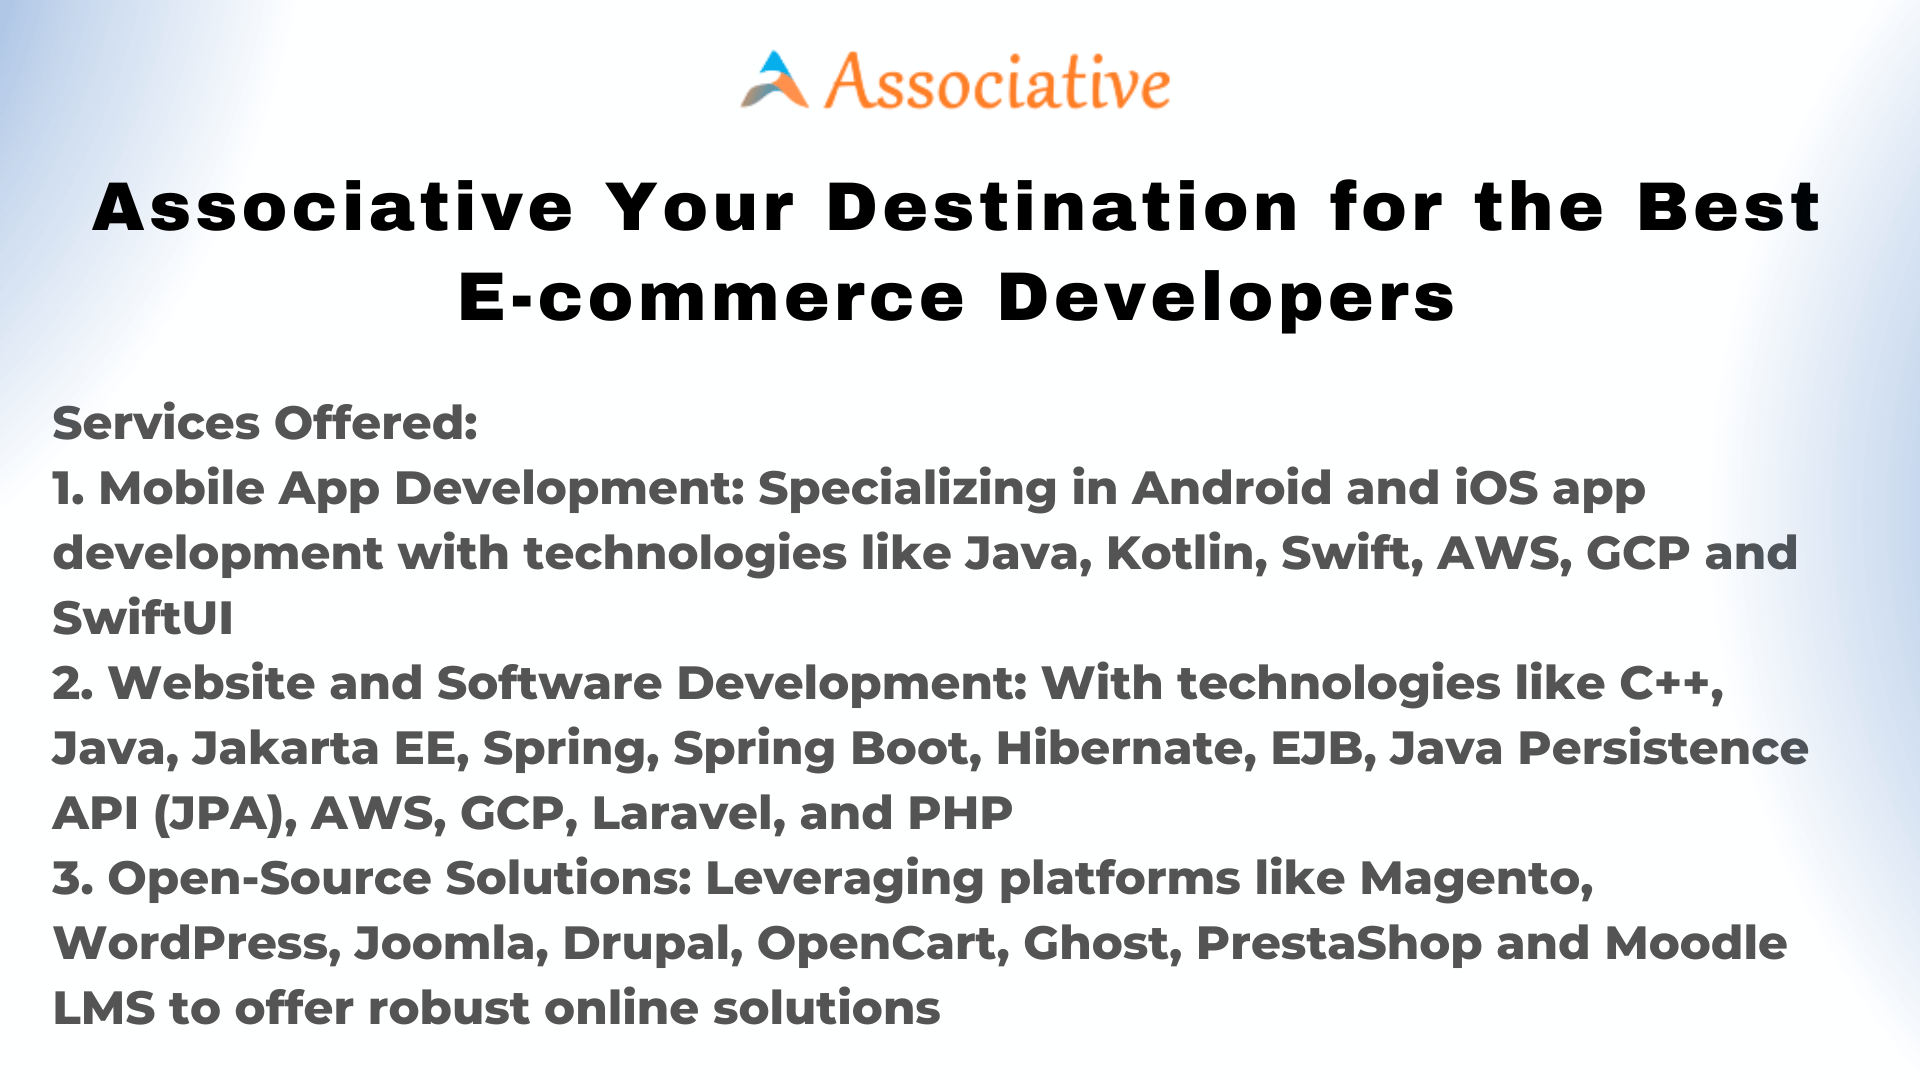 Associative Your Destination for the Best E-commerce Developers